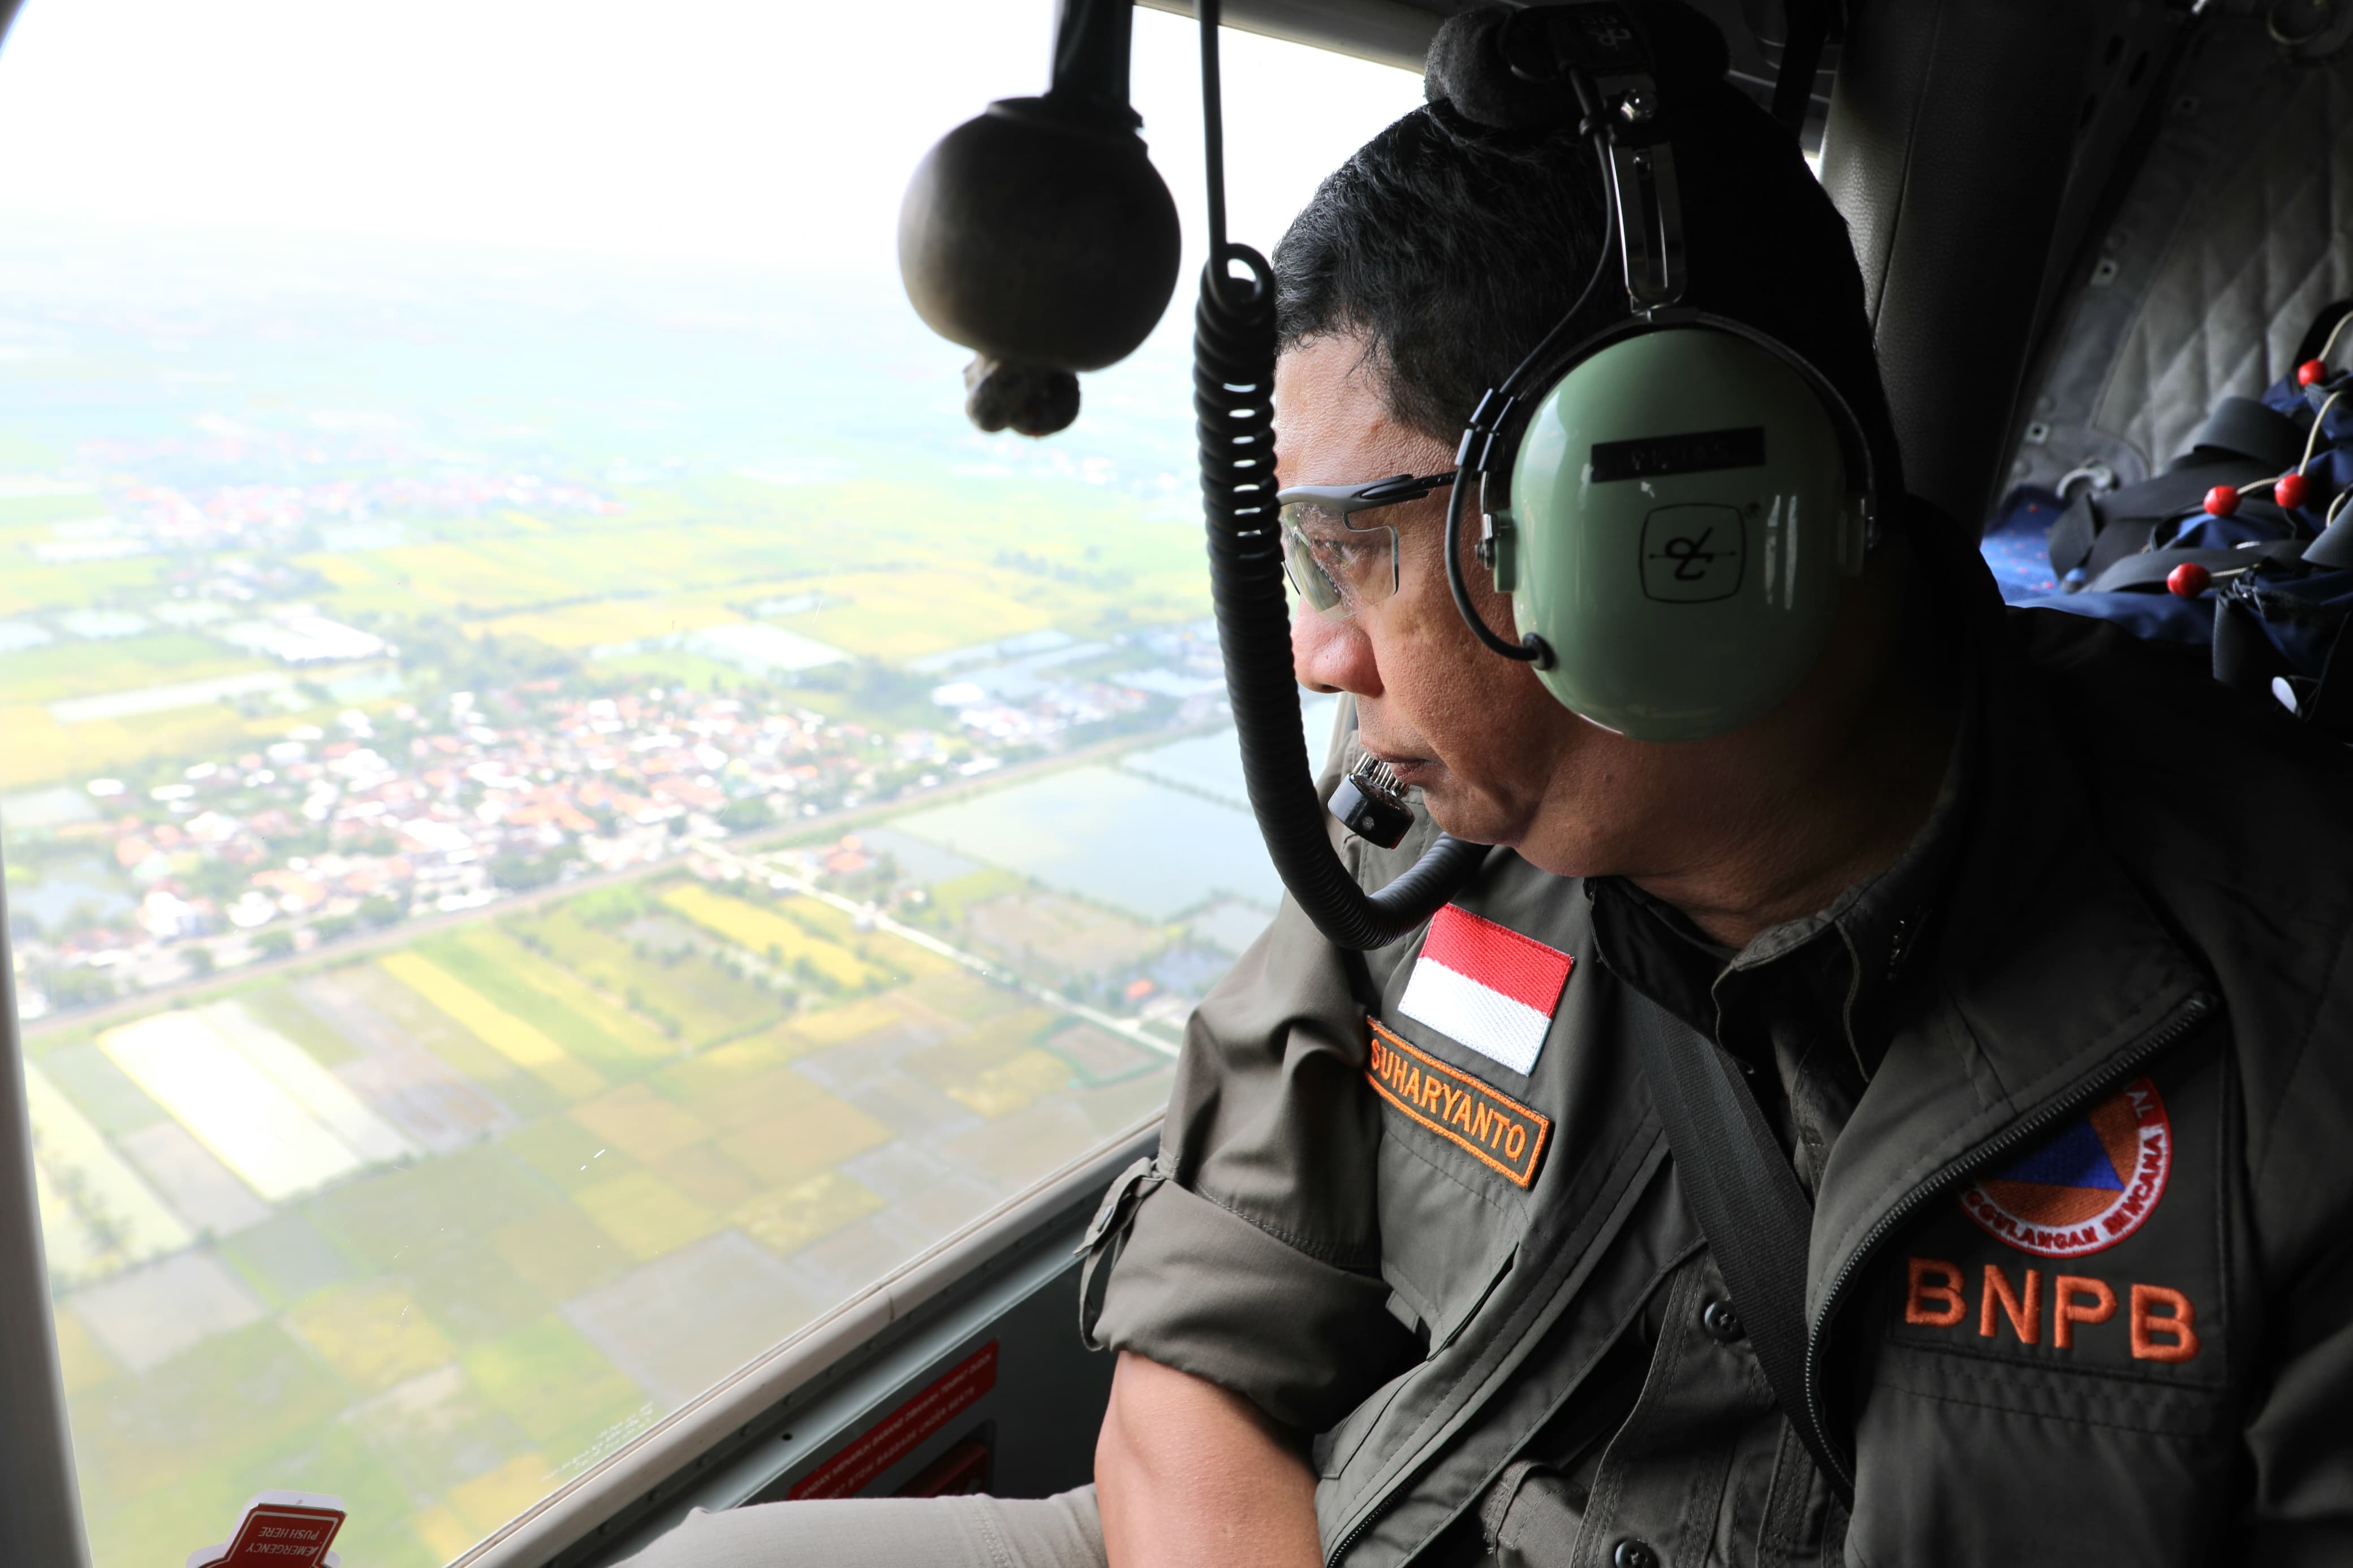 Kepala BNPB Pantau Arus Balik Jatim dari Udara: Imbau Masyarakat Tetap Waspada Bencana